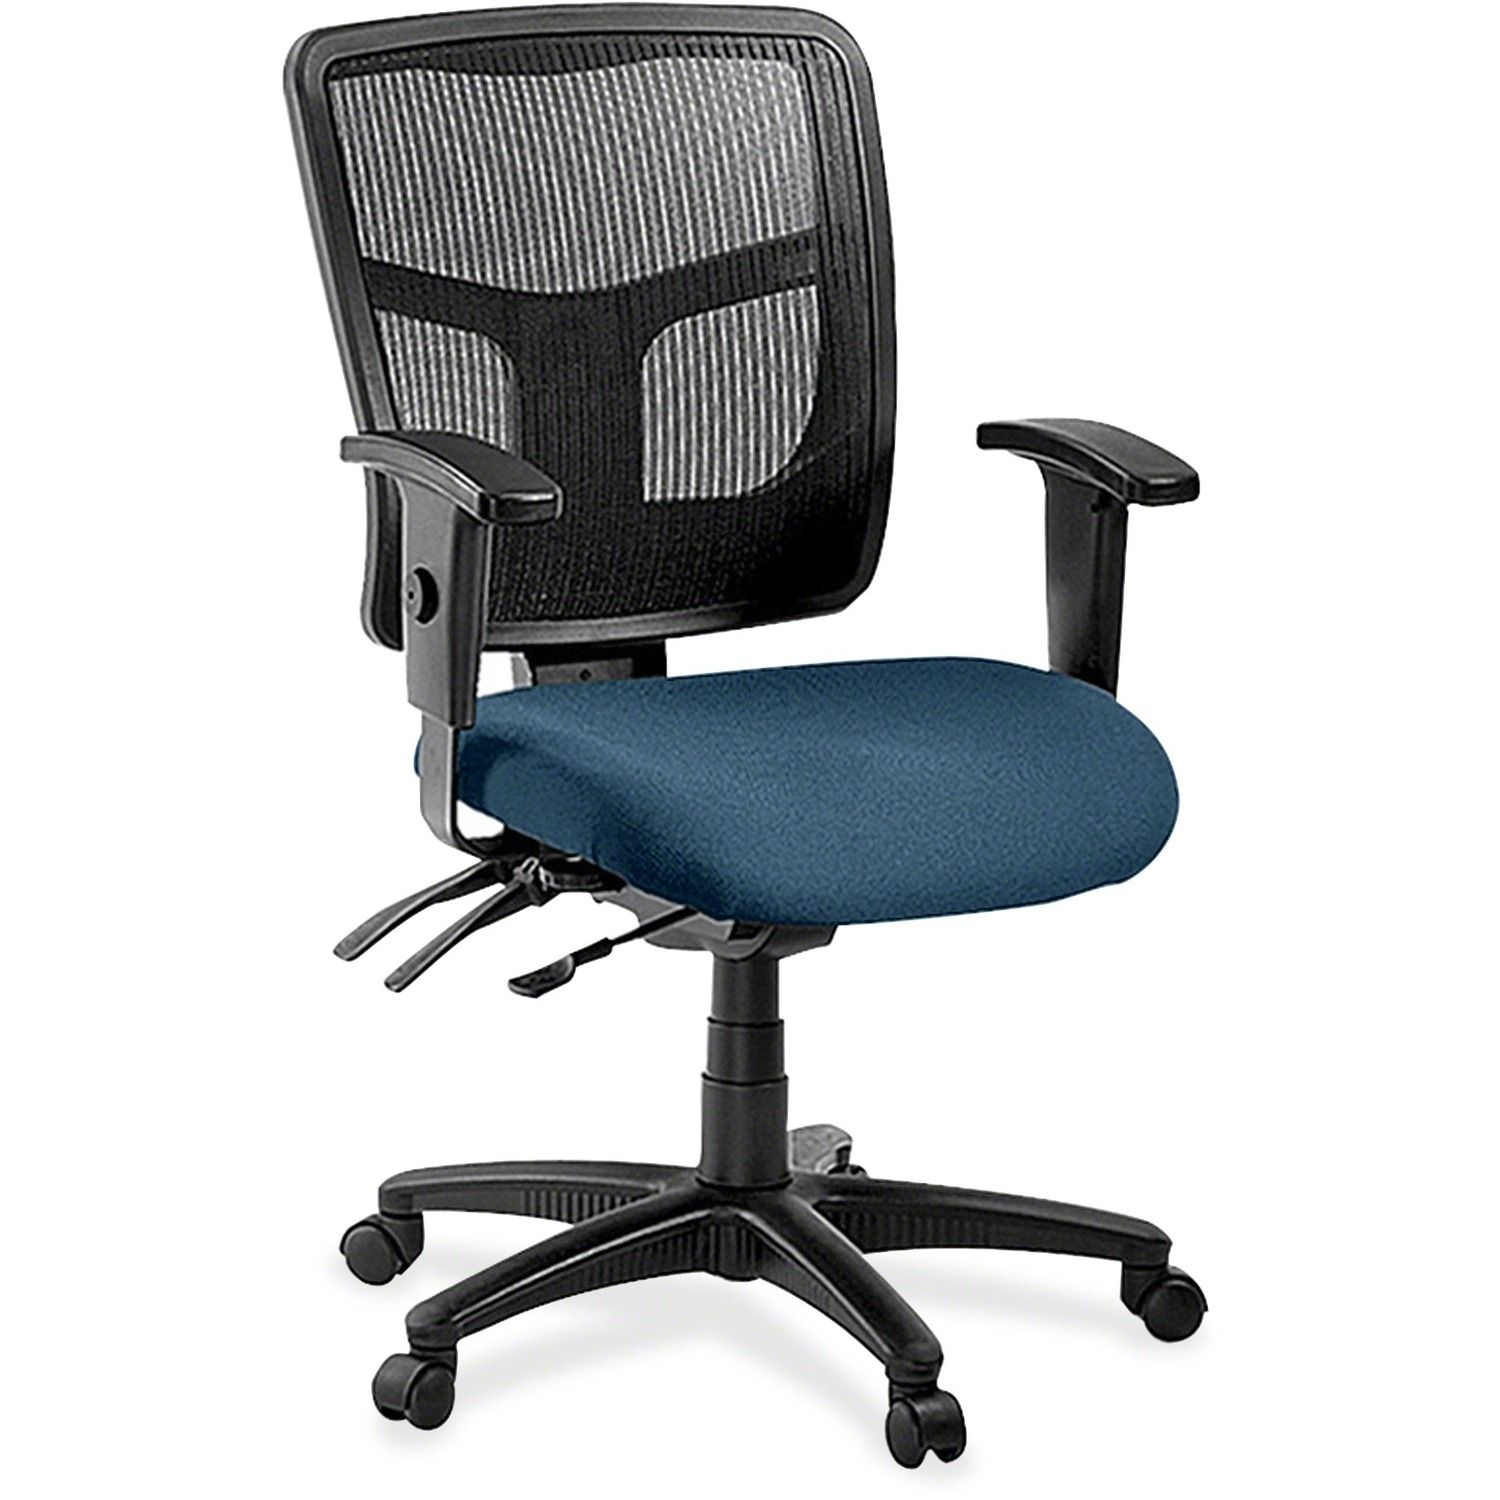 ErgoMesh Series Managerial Mid-Back Chair Eyes Graphite Fabric Seat, Black Back, Black Frame, 5-star Base, Black, 1 Each